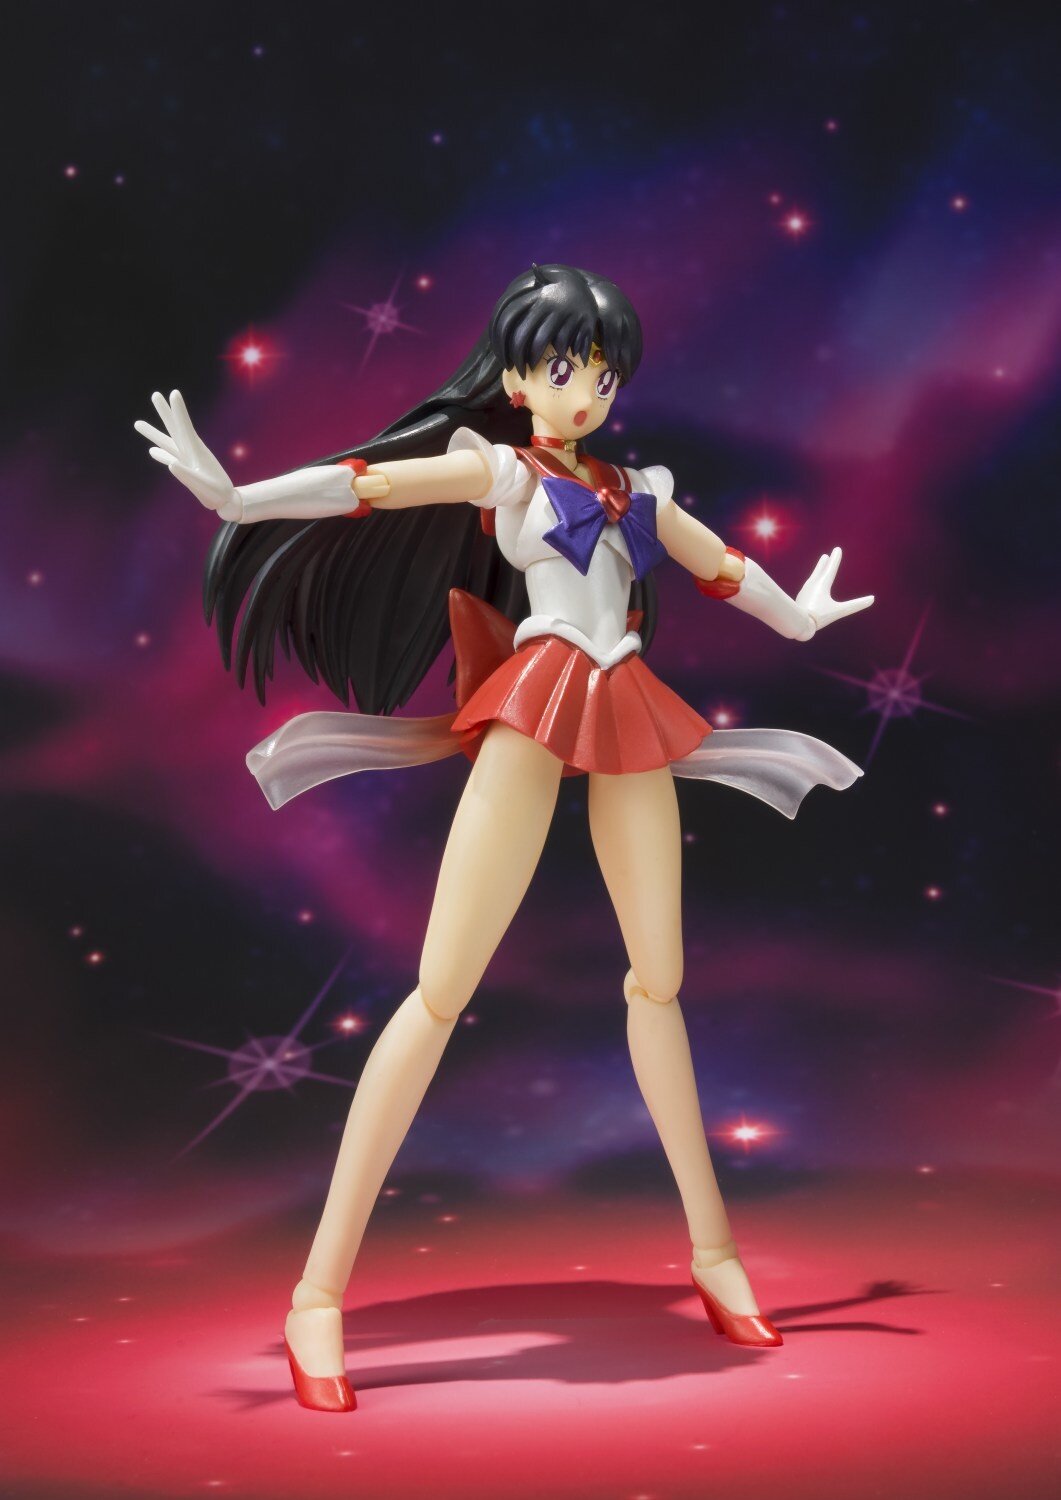 Sailor Moon Sailor Mars SH Figuarts Action Figure – Milly's Toy Shop